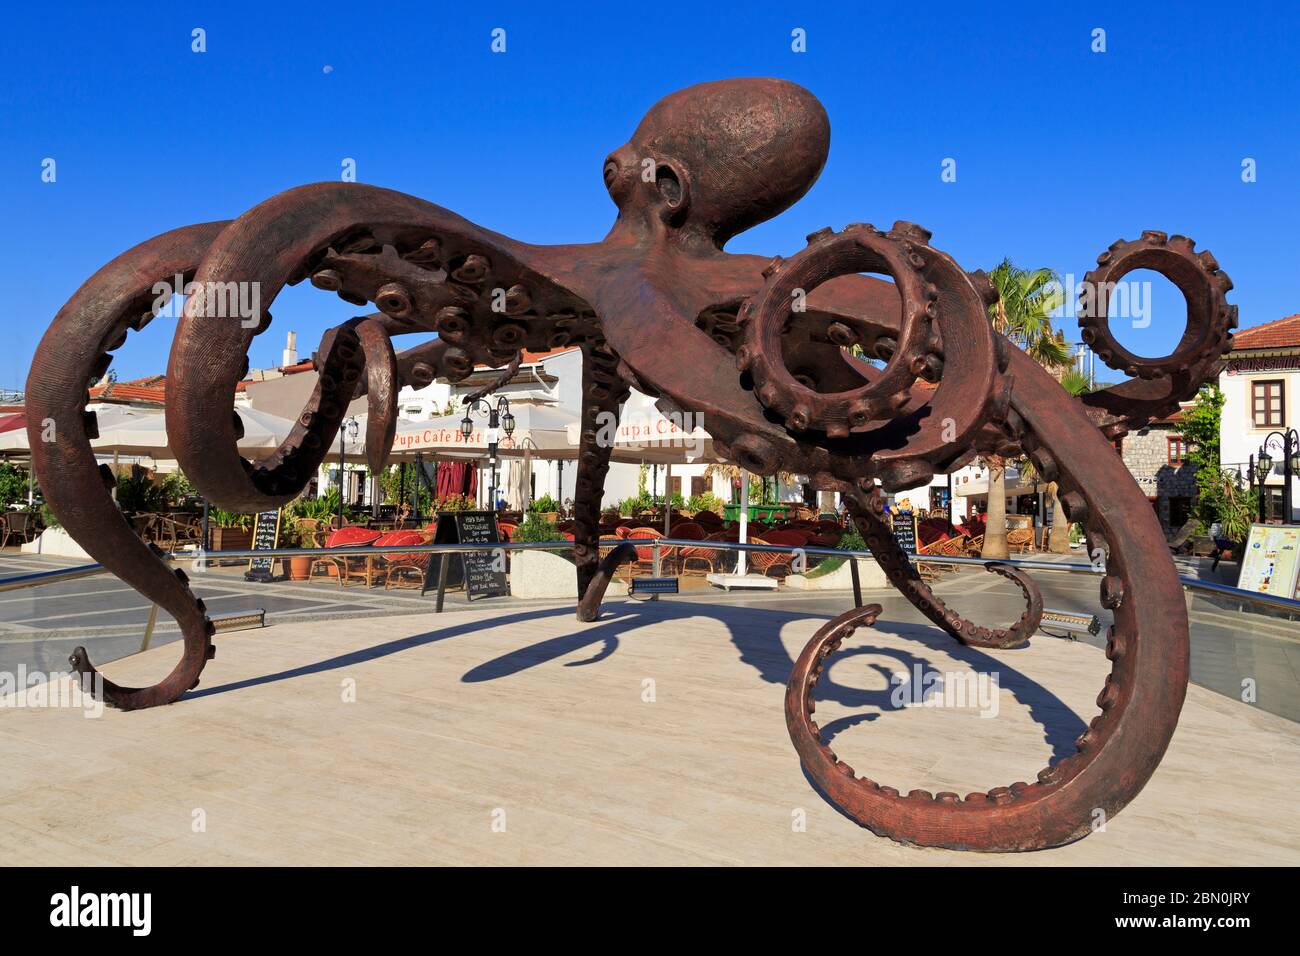 Octopus sculpture in Old Town,Marmaris,Turkey,Mediterranean Stock Photo